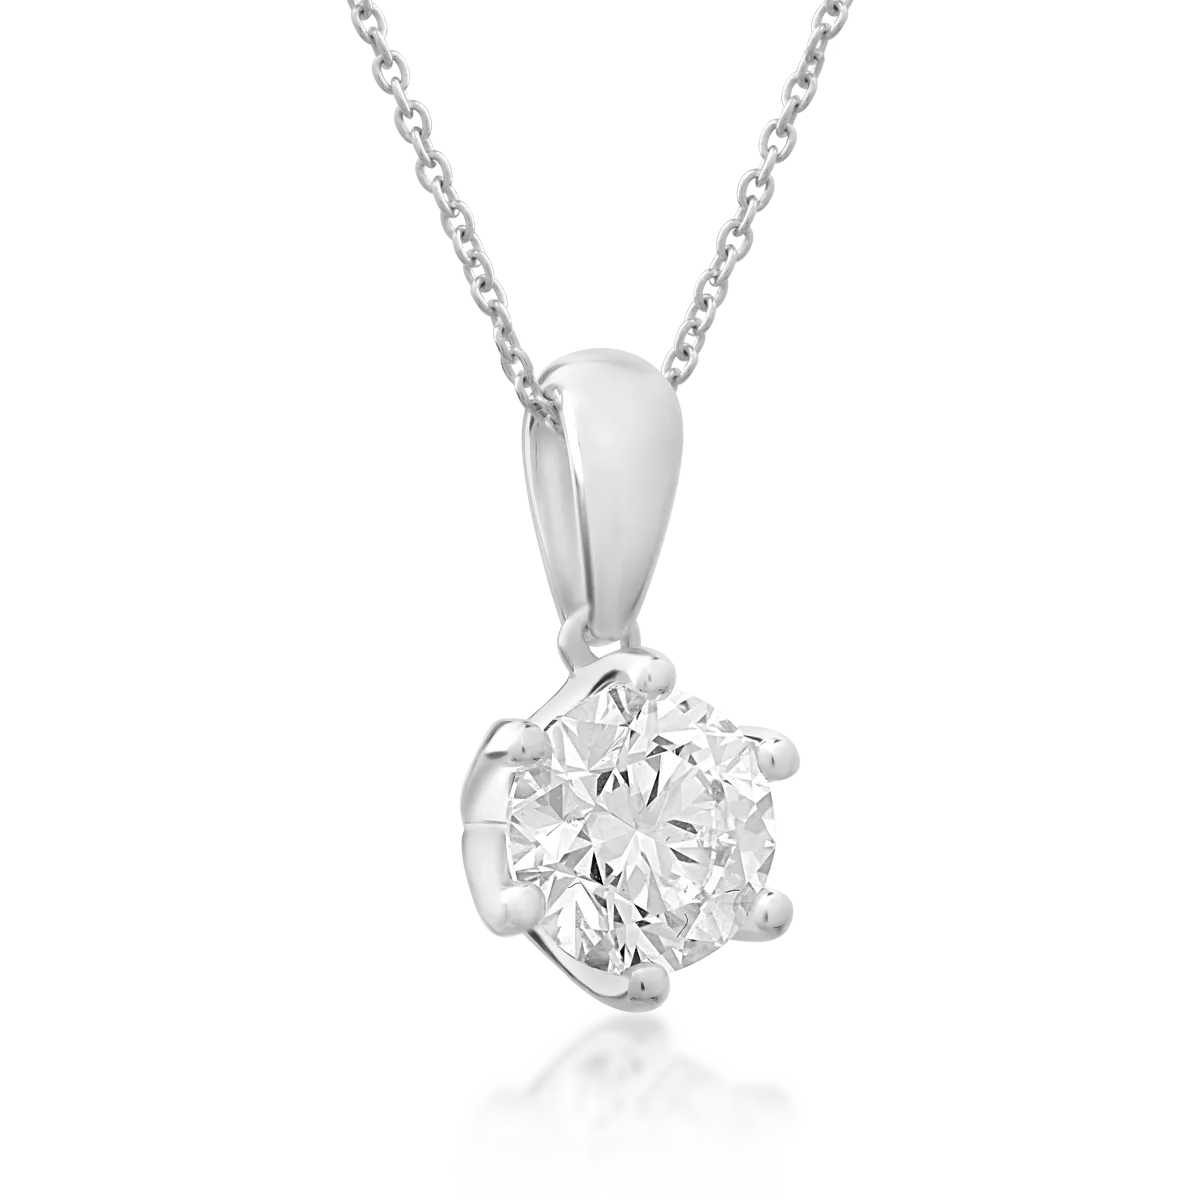 18K white gold pendant chain with 1ct diamond